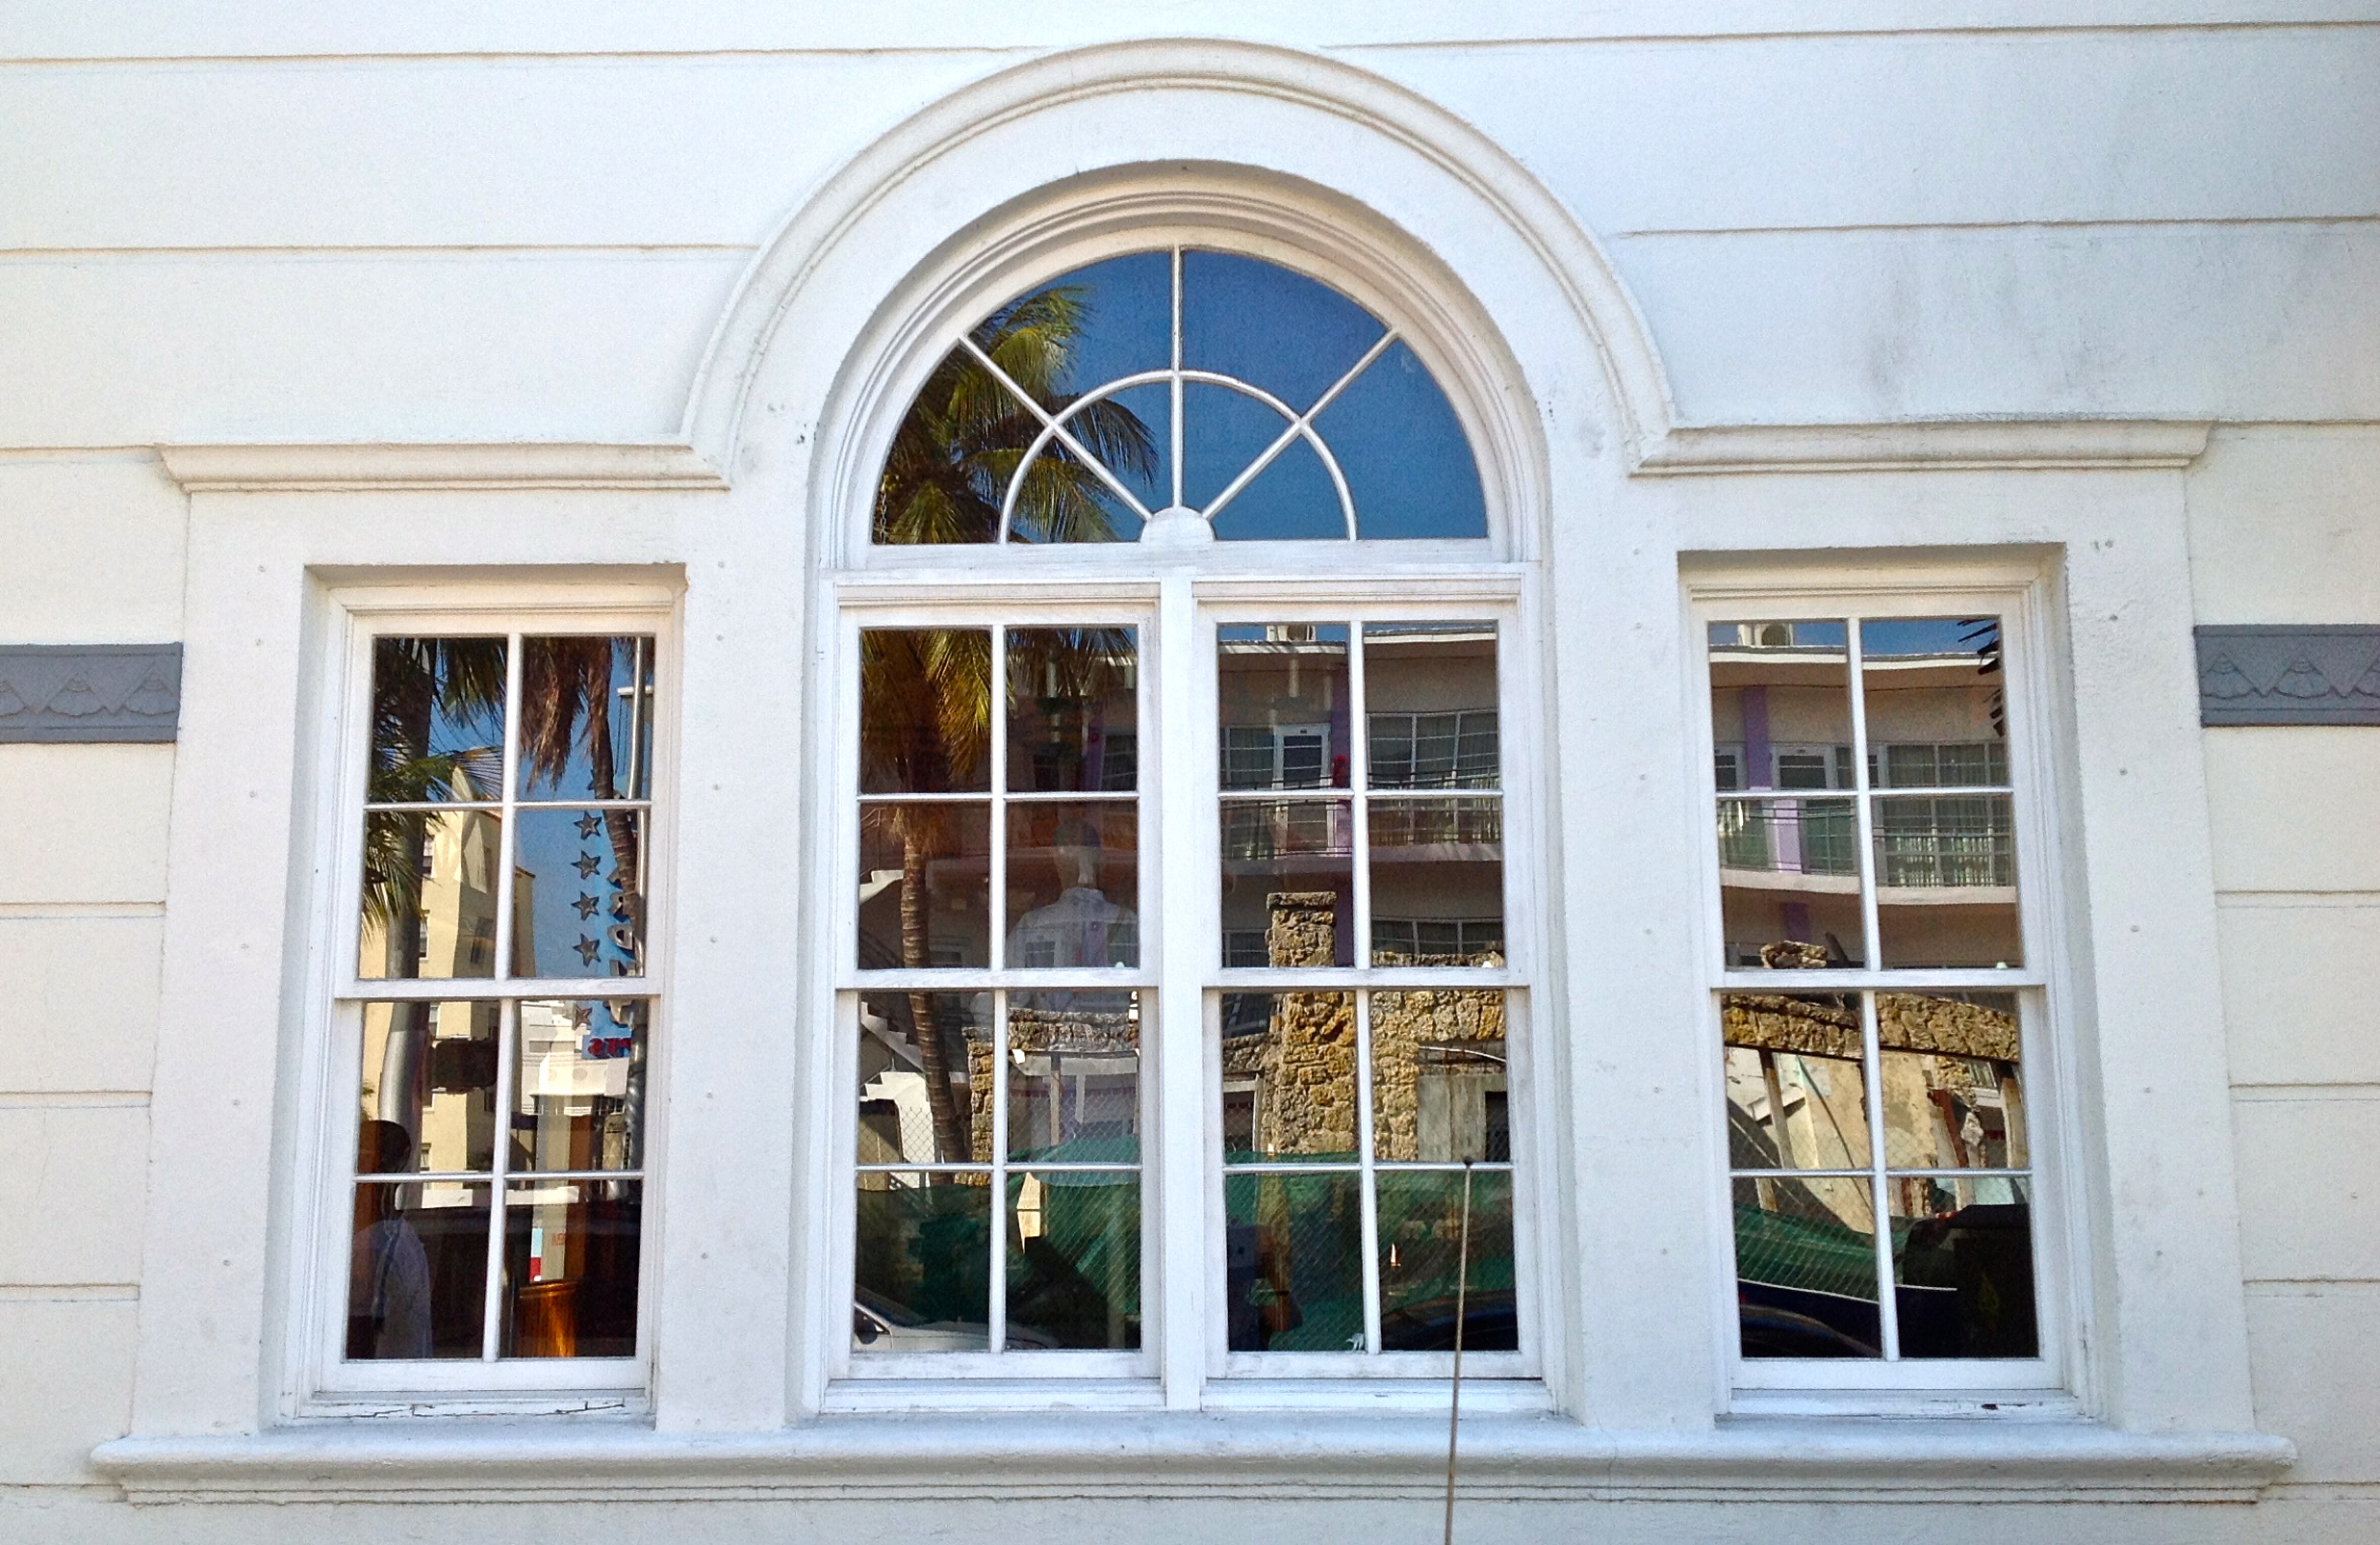 Palladian window